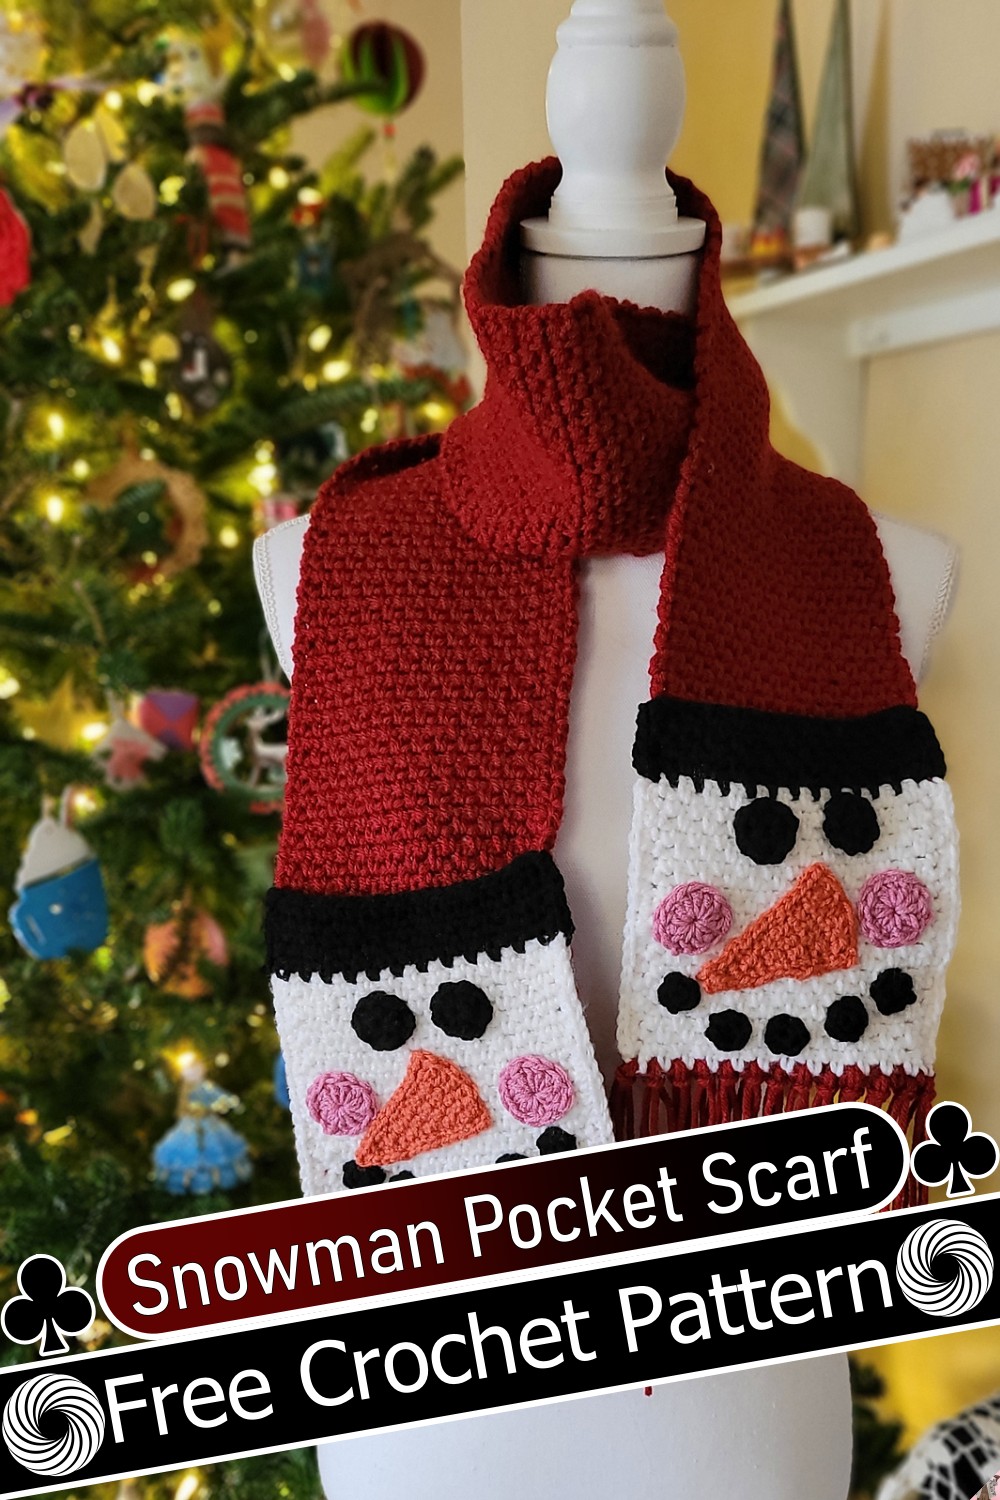 Snowman Pocket Scarf